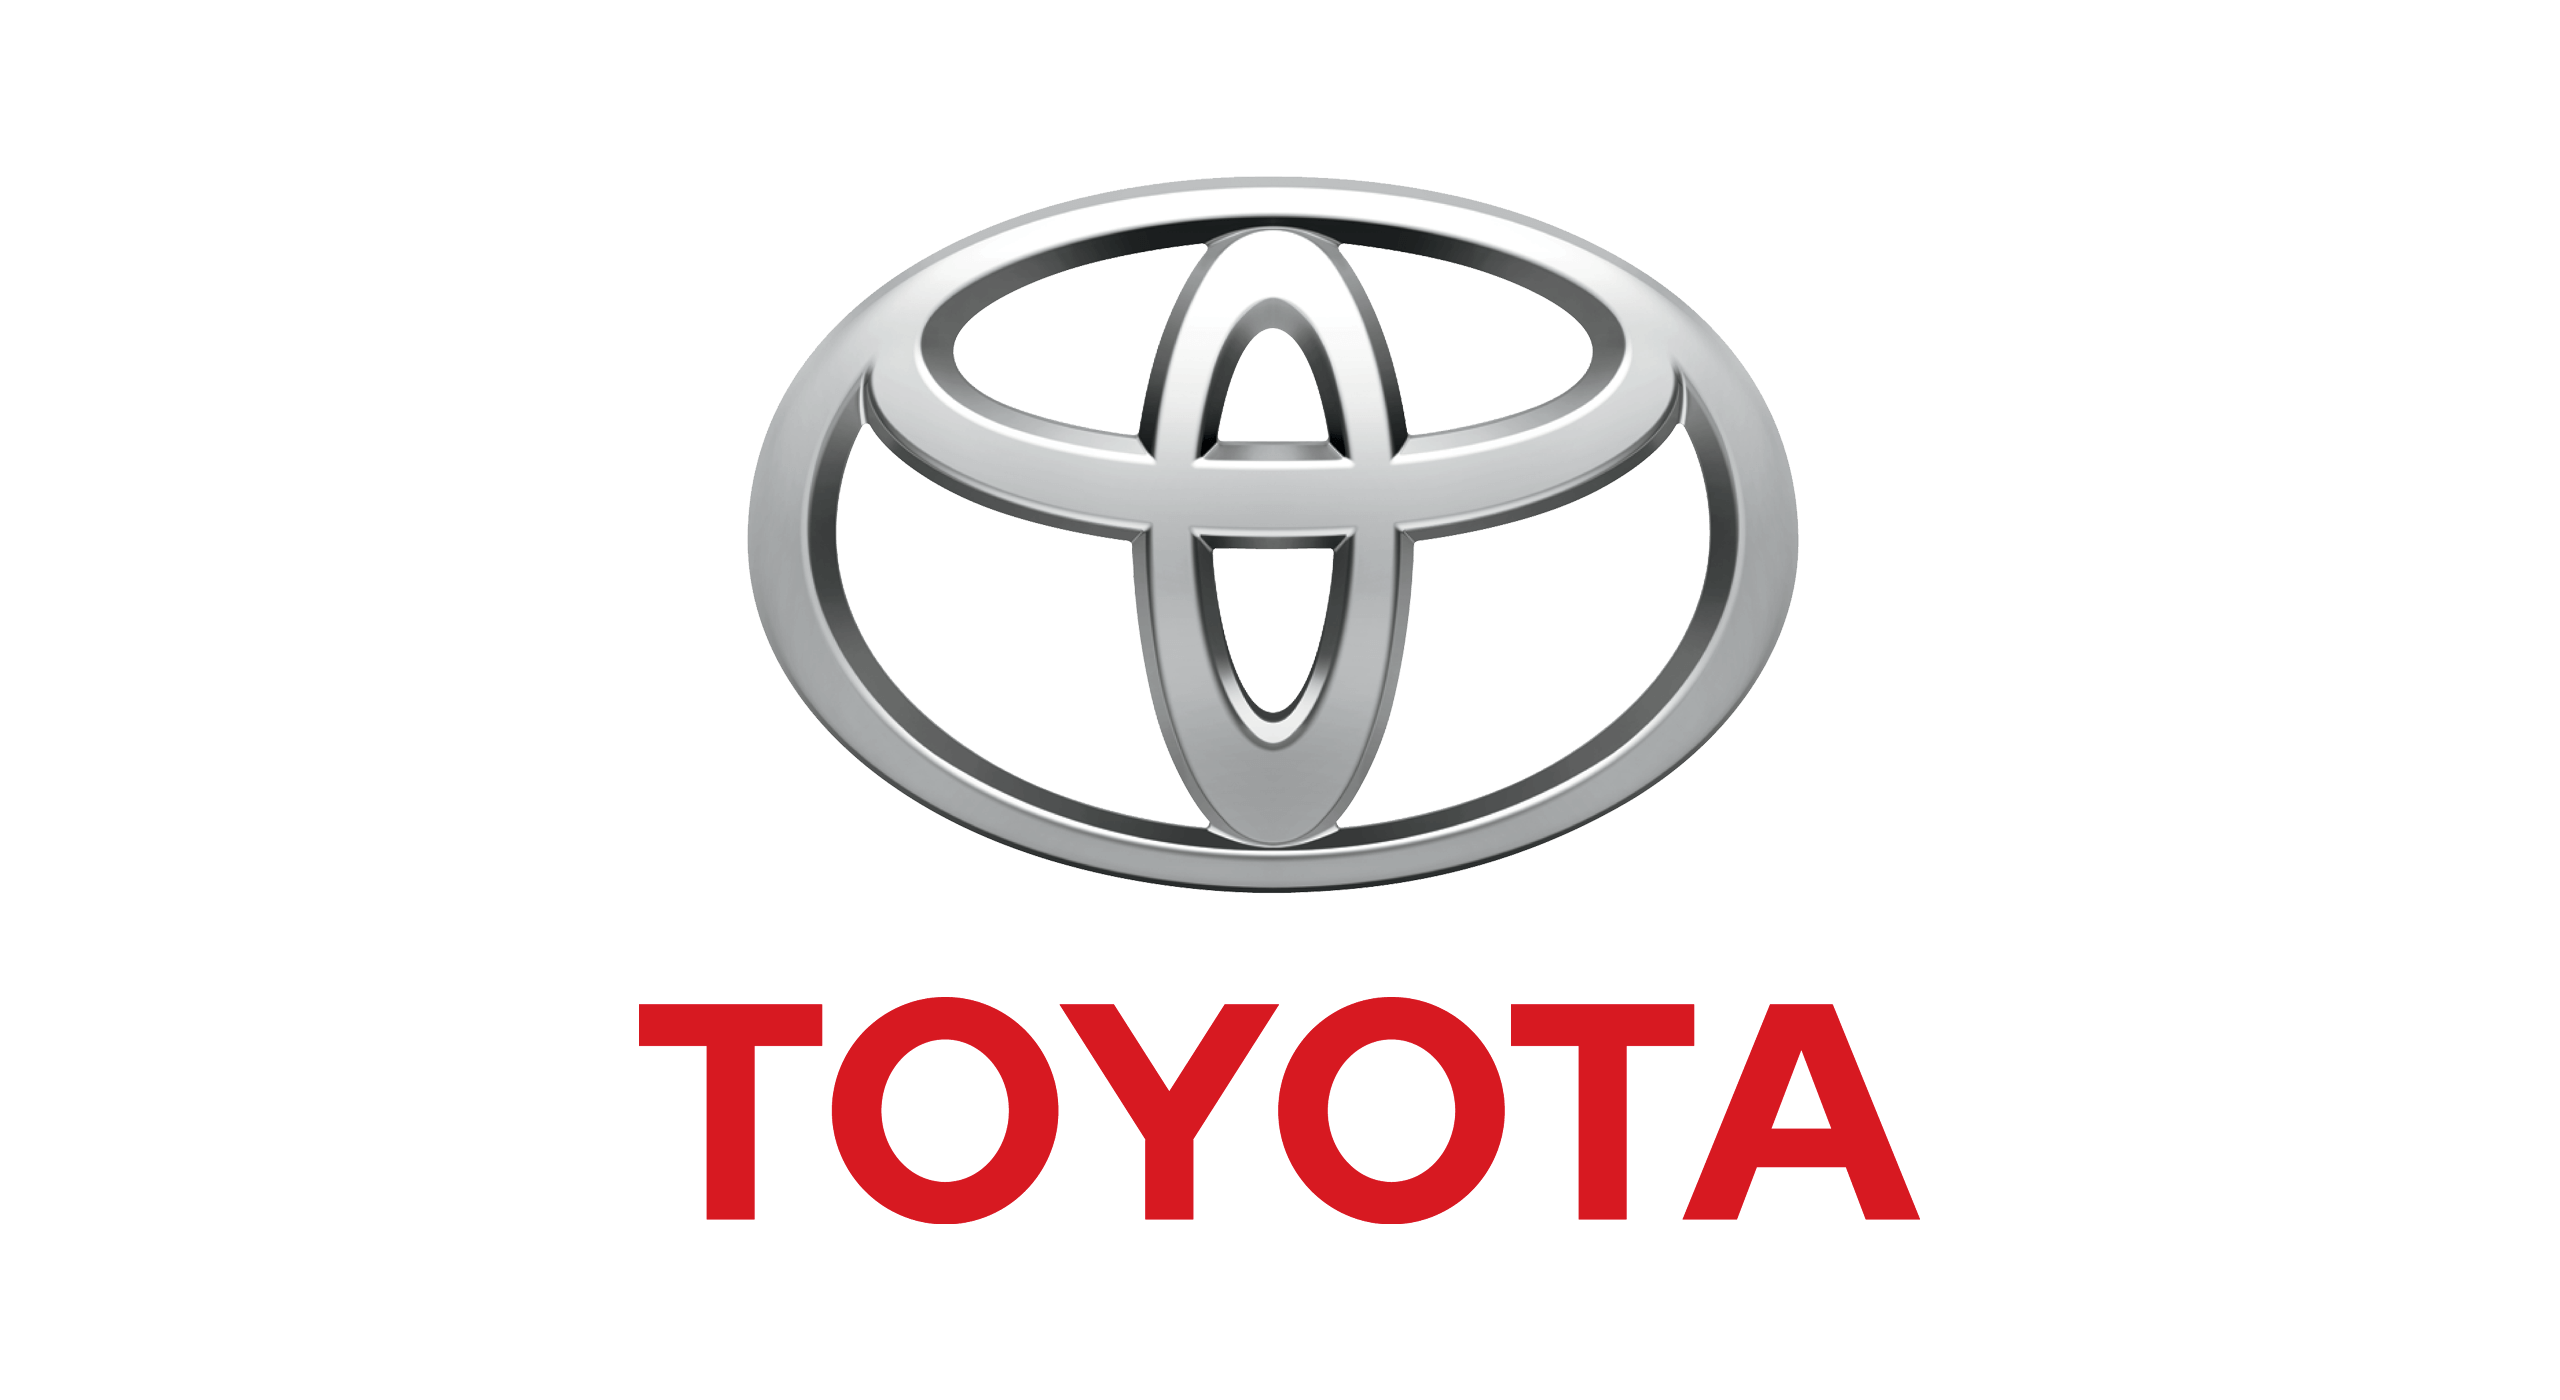 Toyota-logo-1989-2560x1440-1